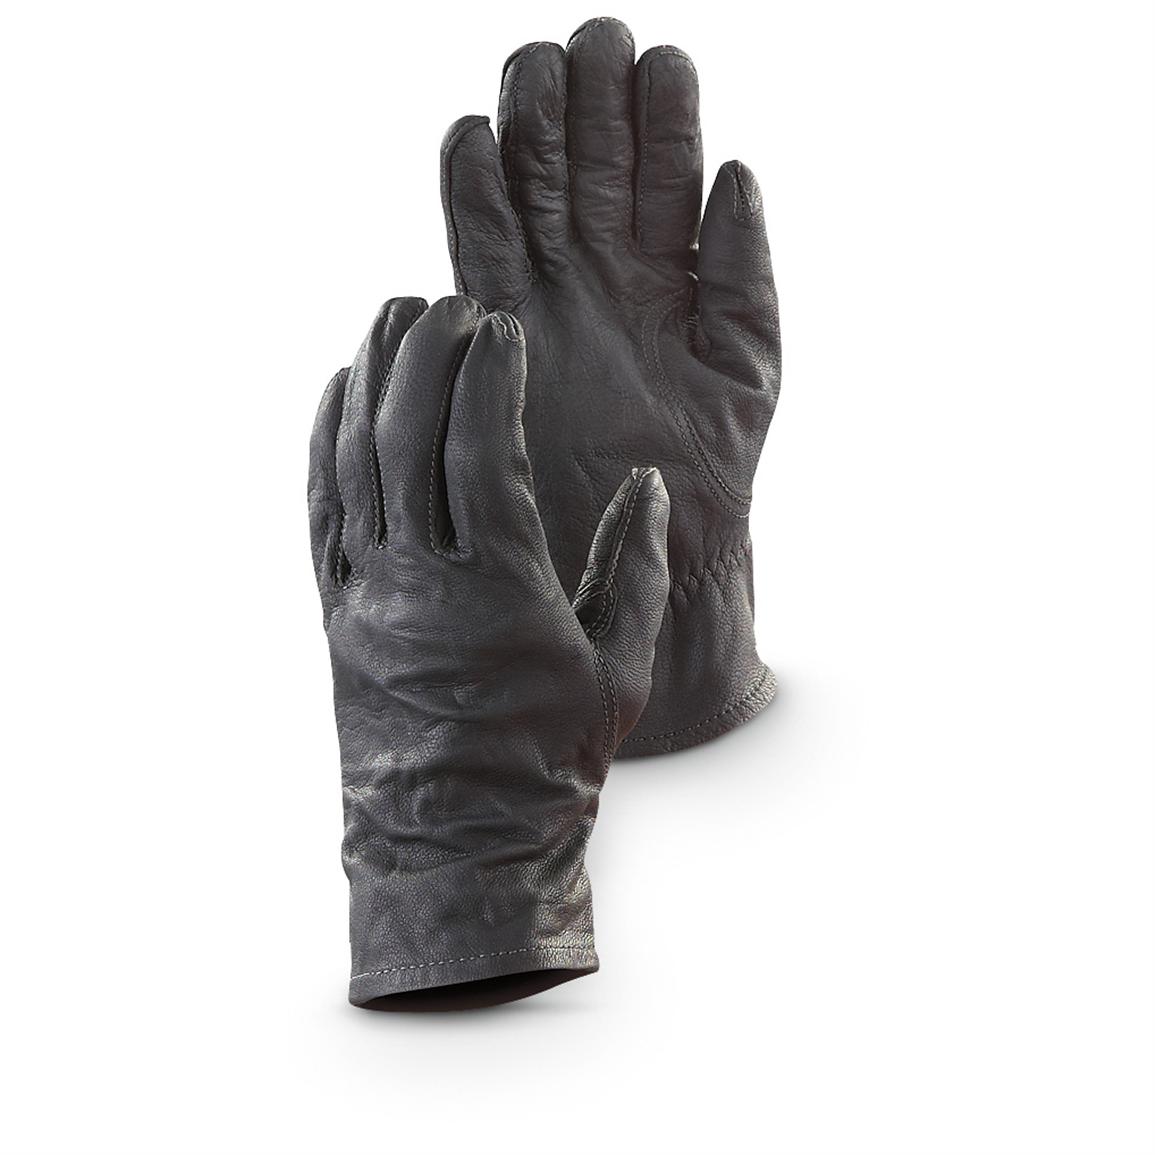 German Military Surplus Leather Gloves, 2 Pack, Used, Black